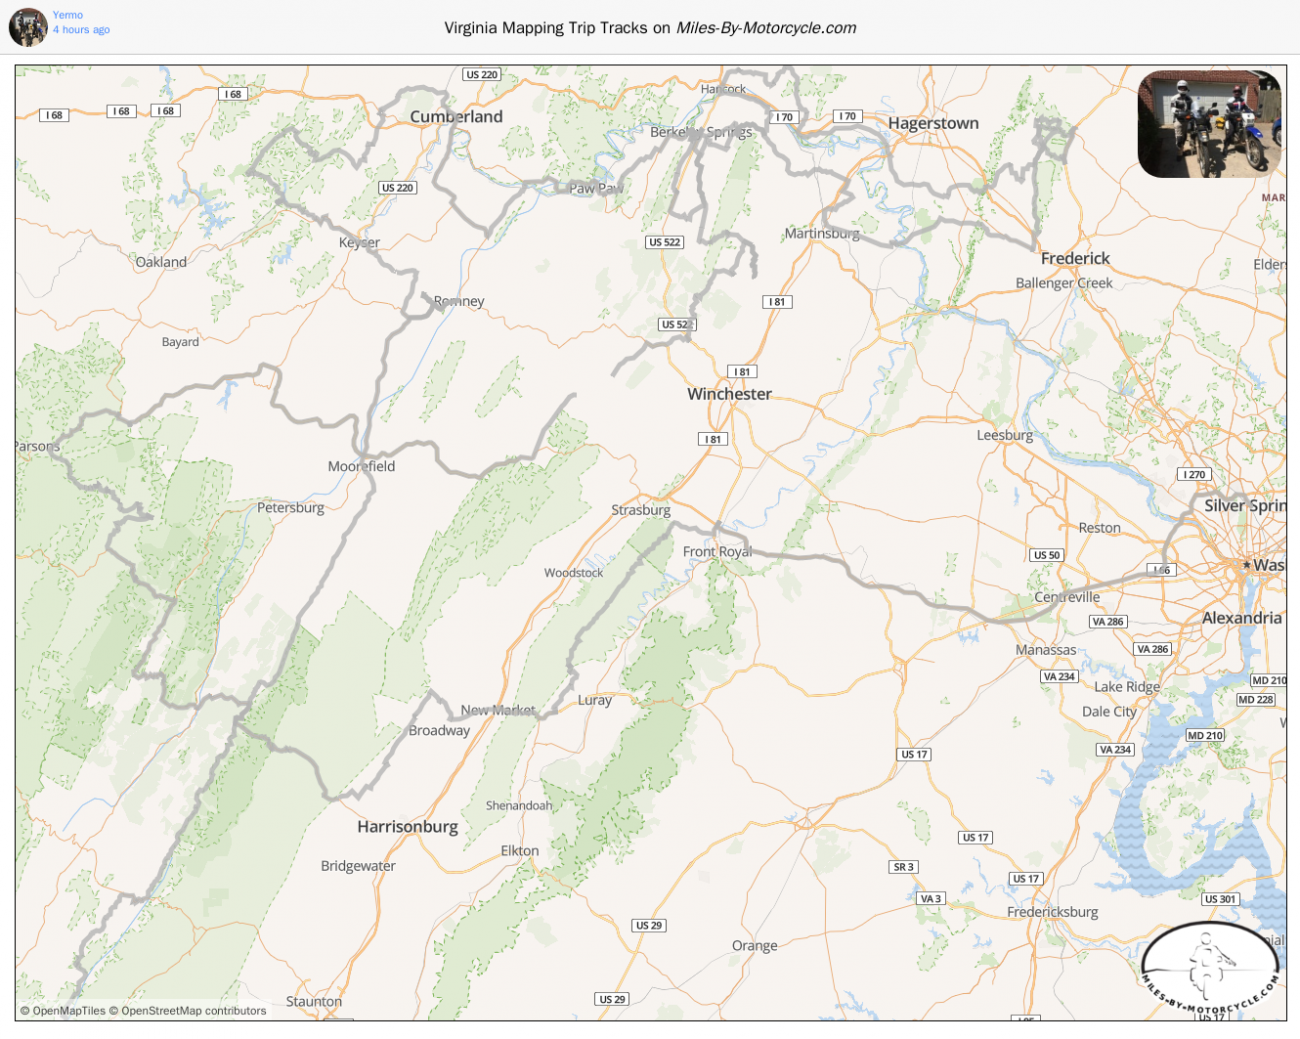 Virginia Mapping Trip Tracks